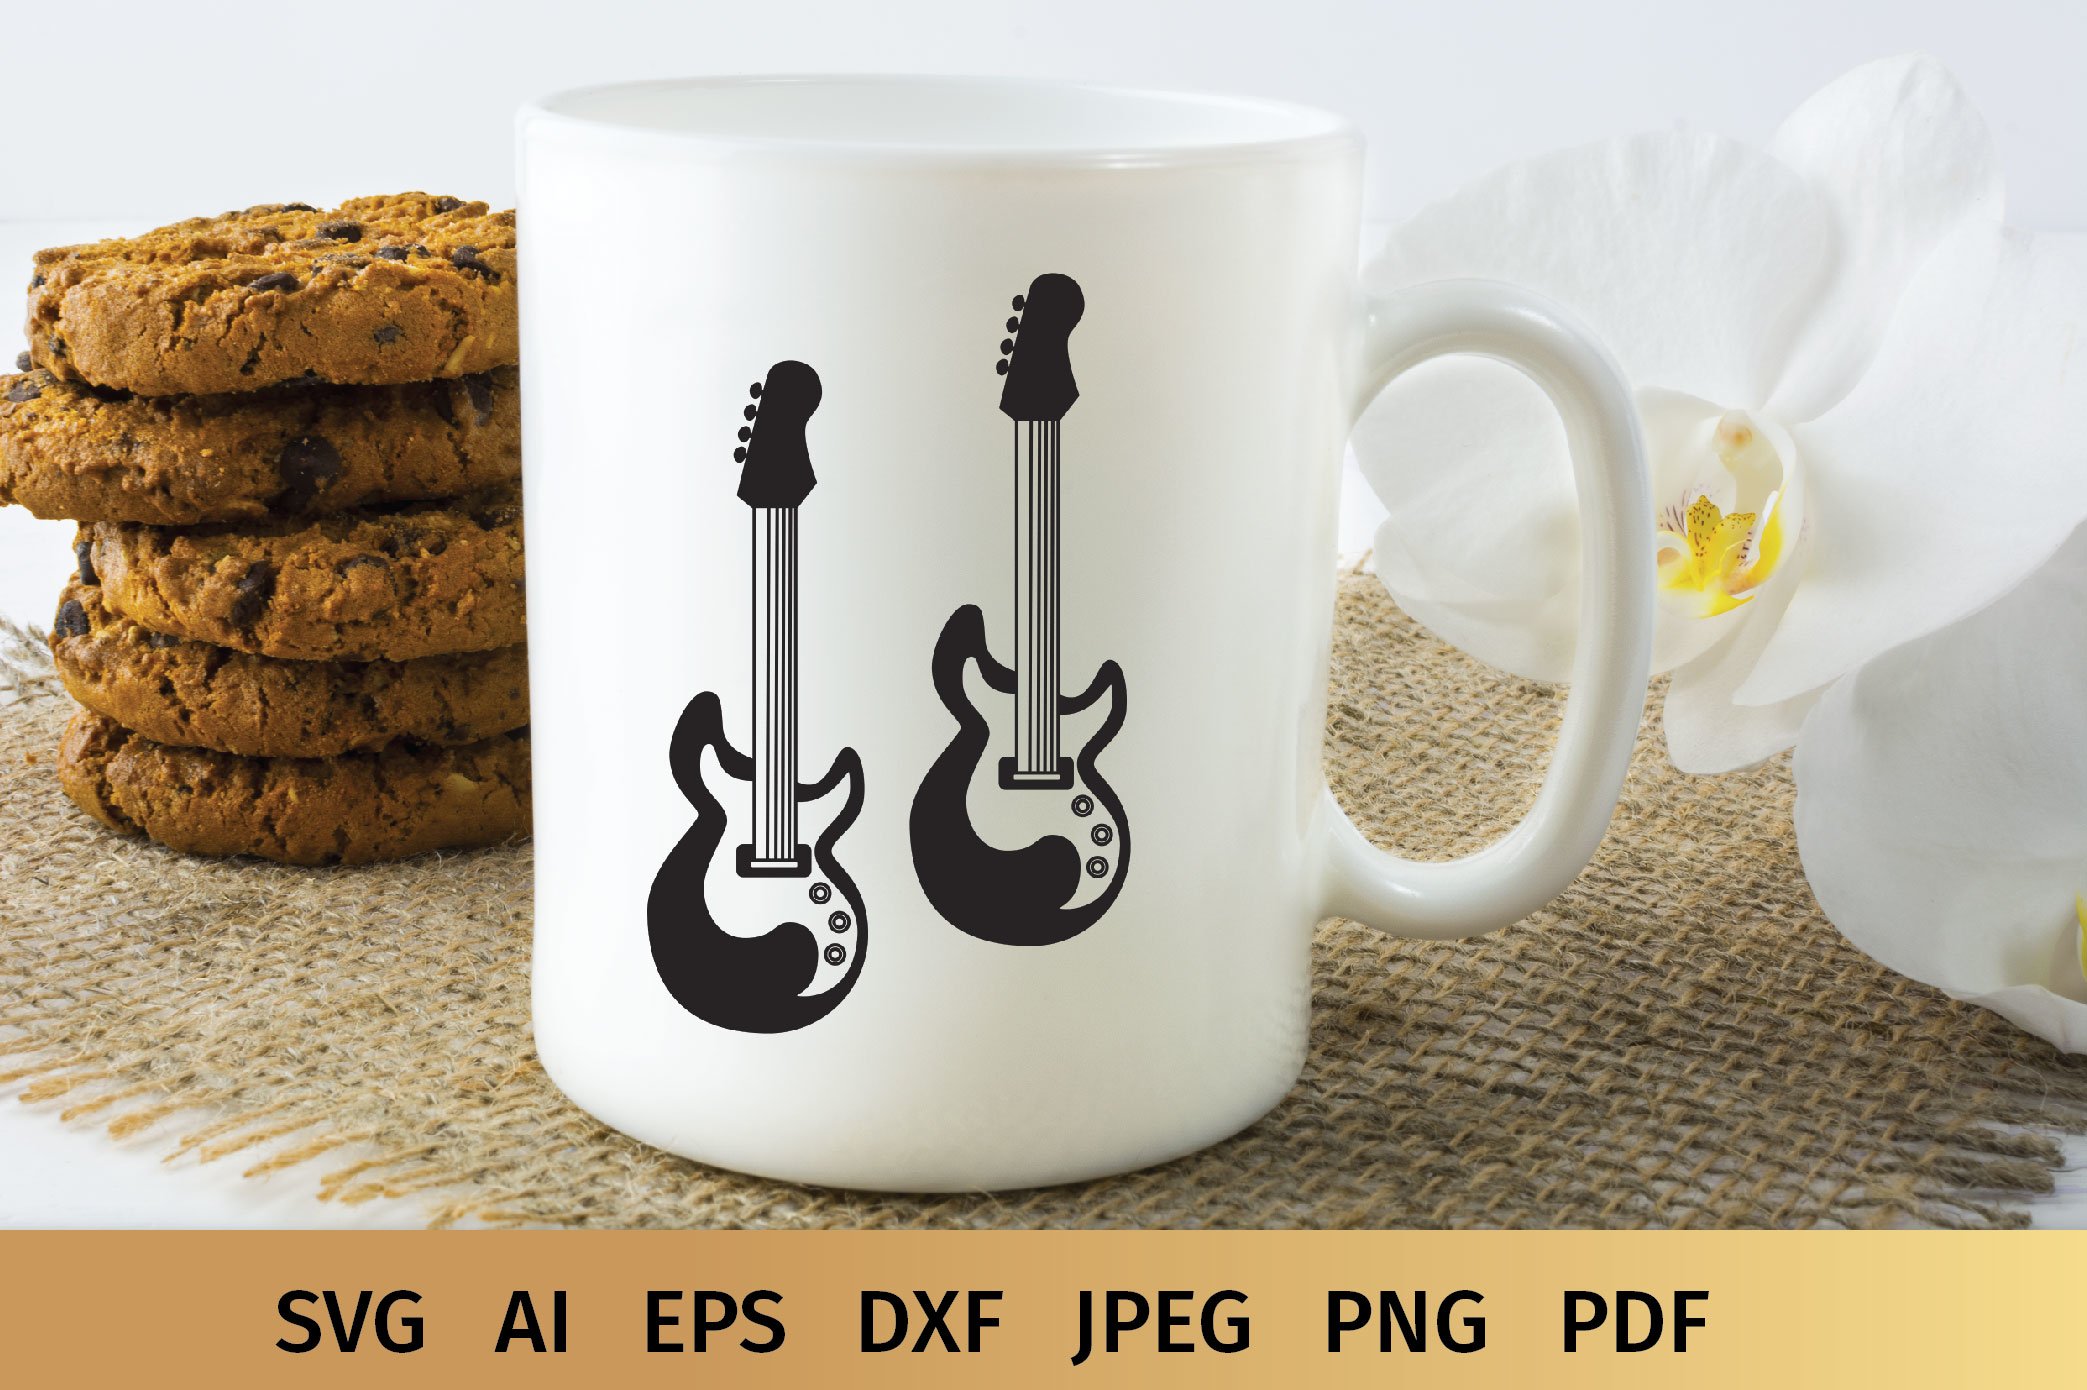 Unique guitars on the mug image.